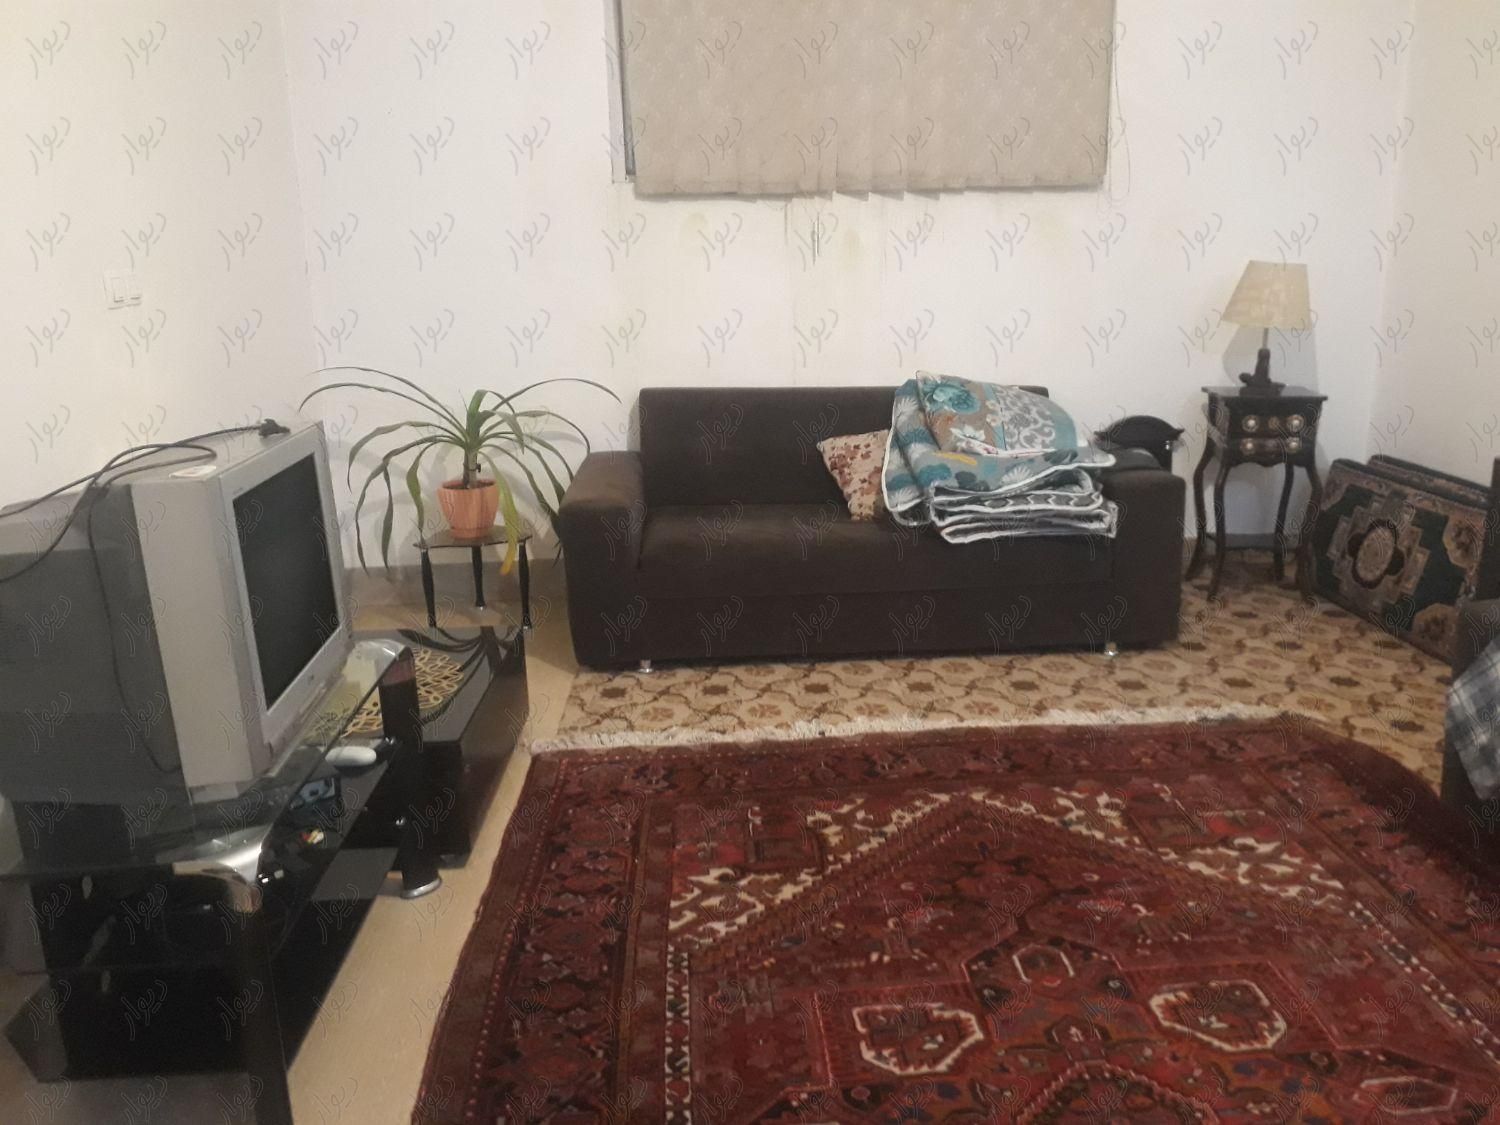 رهن کامل یه خواب ویلایی طبقه ۲|اجارهٔ خانه و ویلا|شیراز, هویزه|دیوار